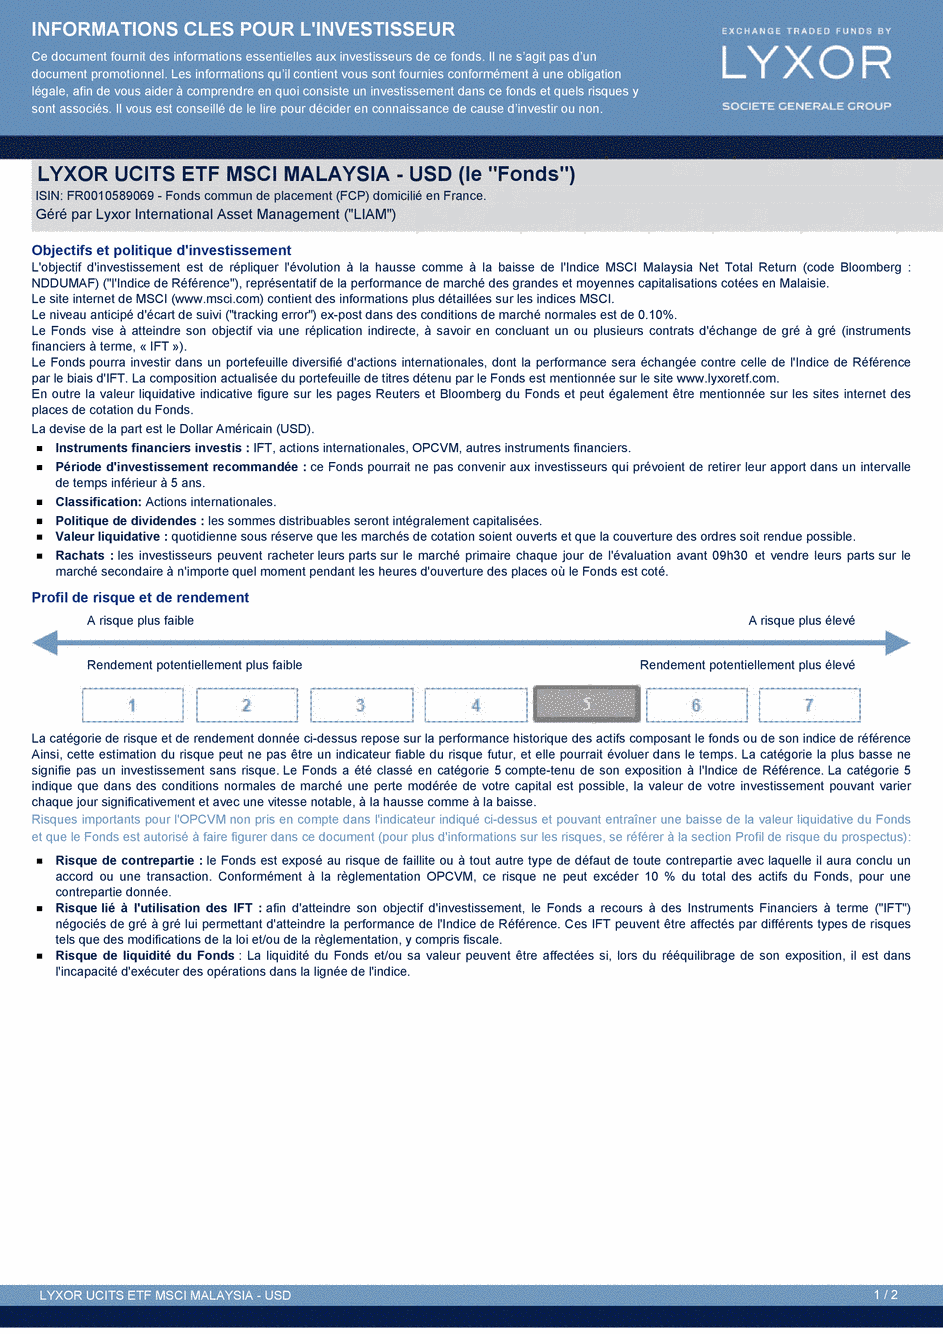 DICI Lyxor MSCI Malaysia UCITS ETF - USD - 27/02/2015 - Français